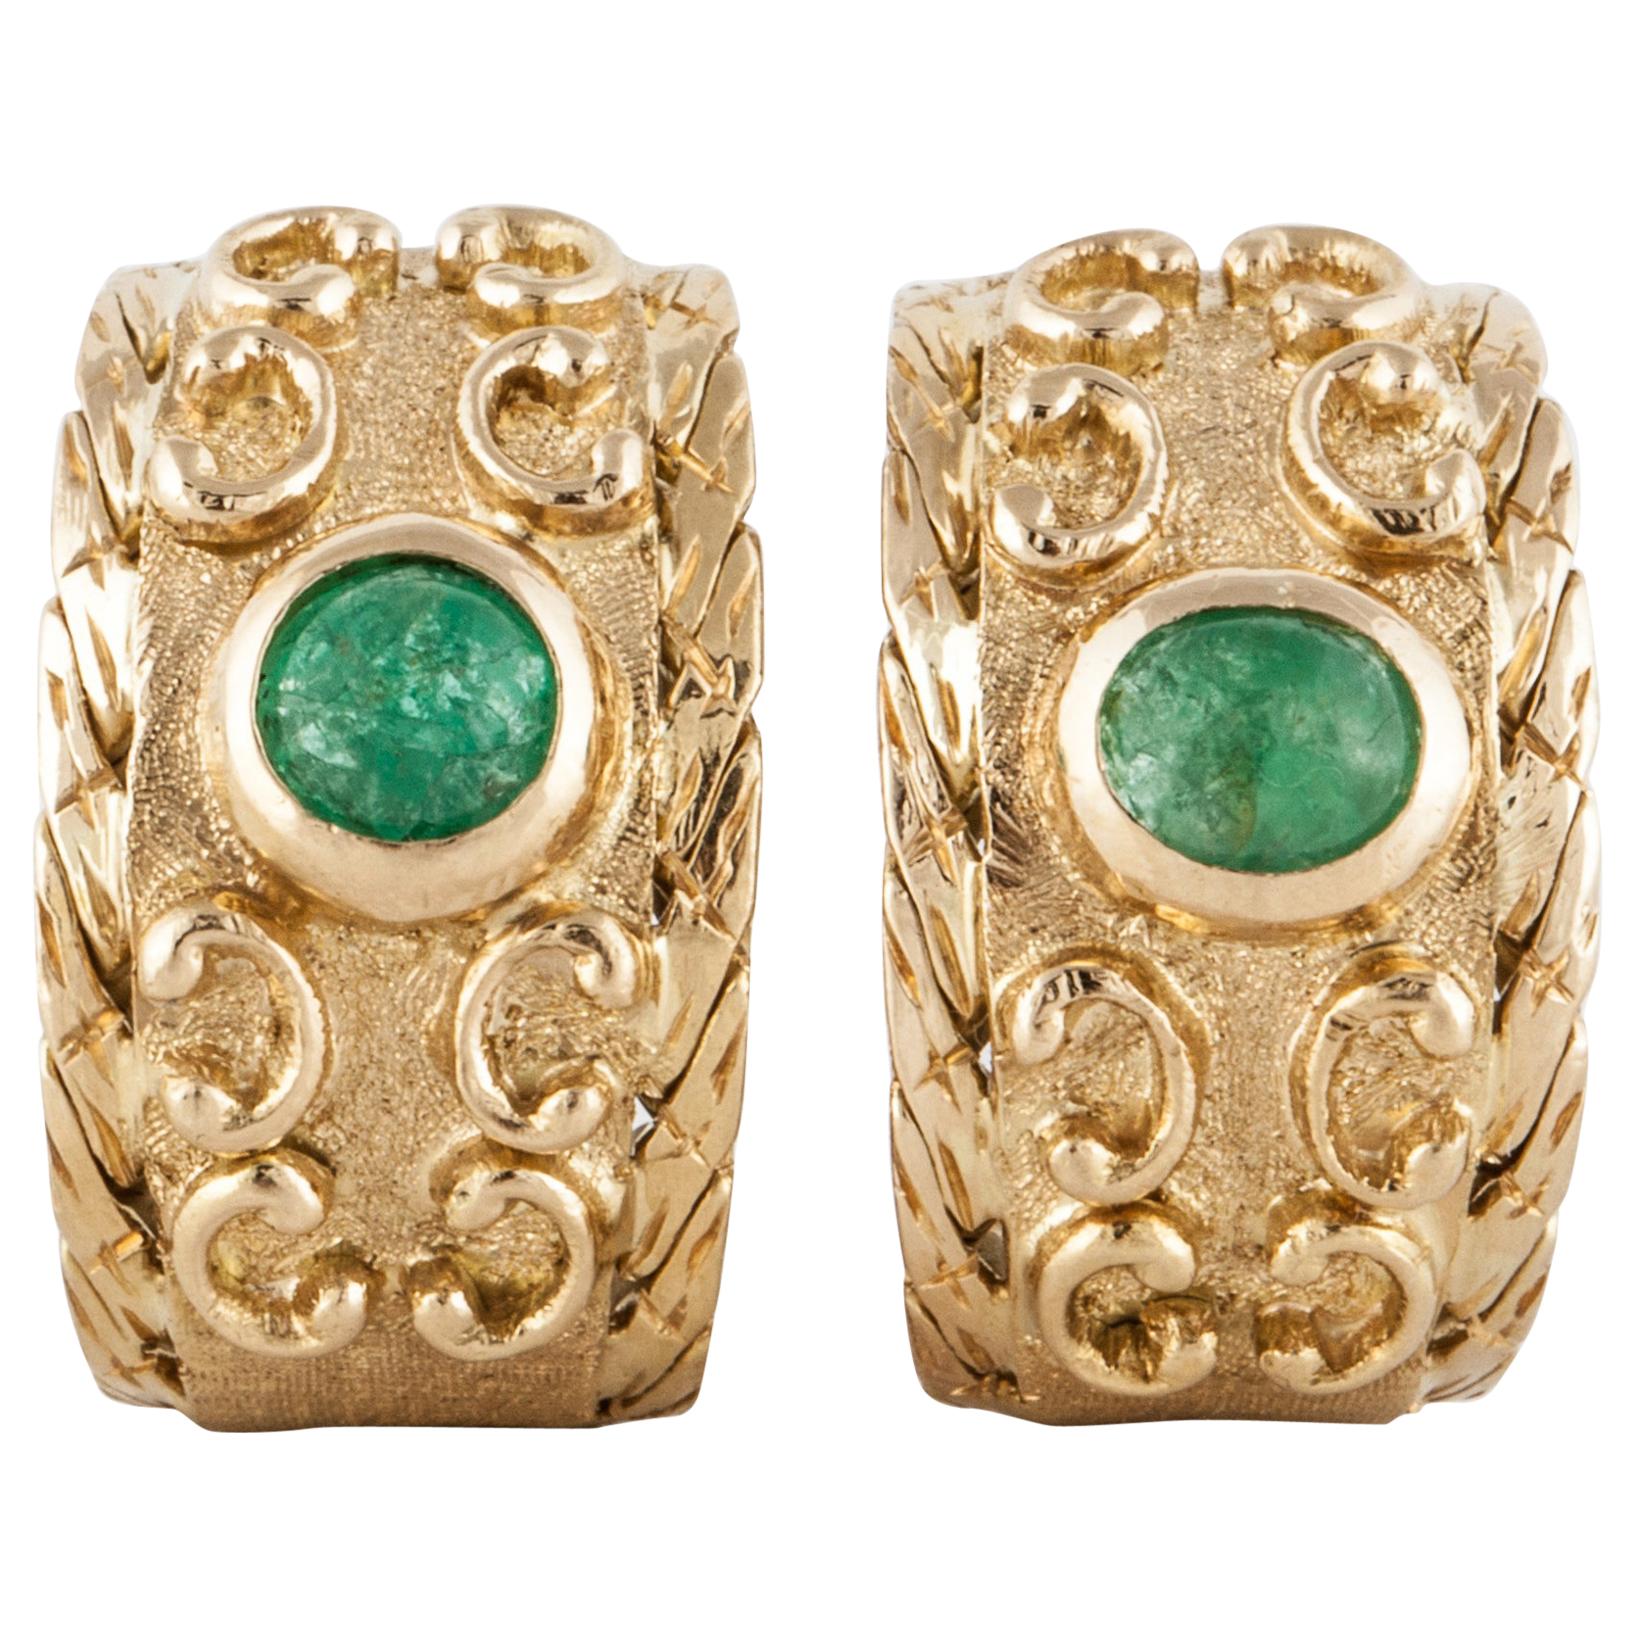 Buccellati Emerald Earrings in 18K Gold